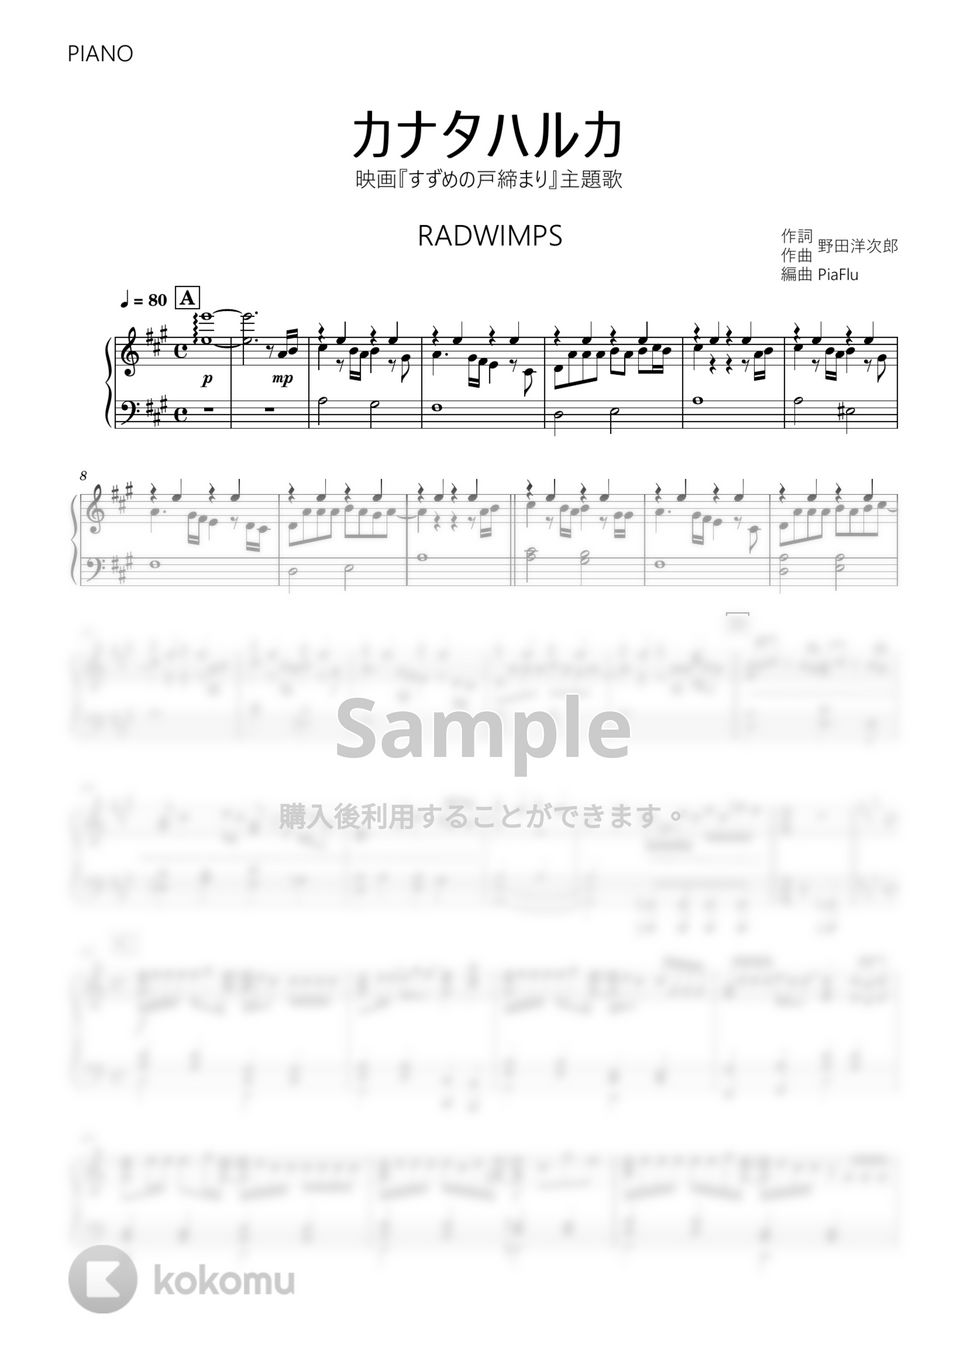 RADWIMPS - カナタハルカ (ピアノ) by PiaFlu